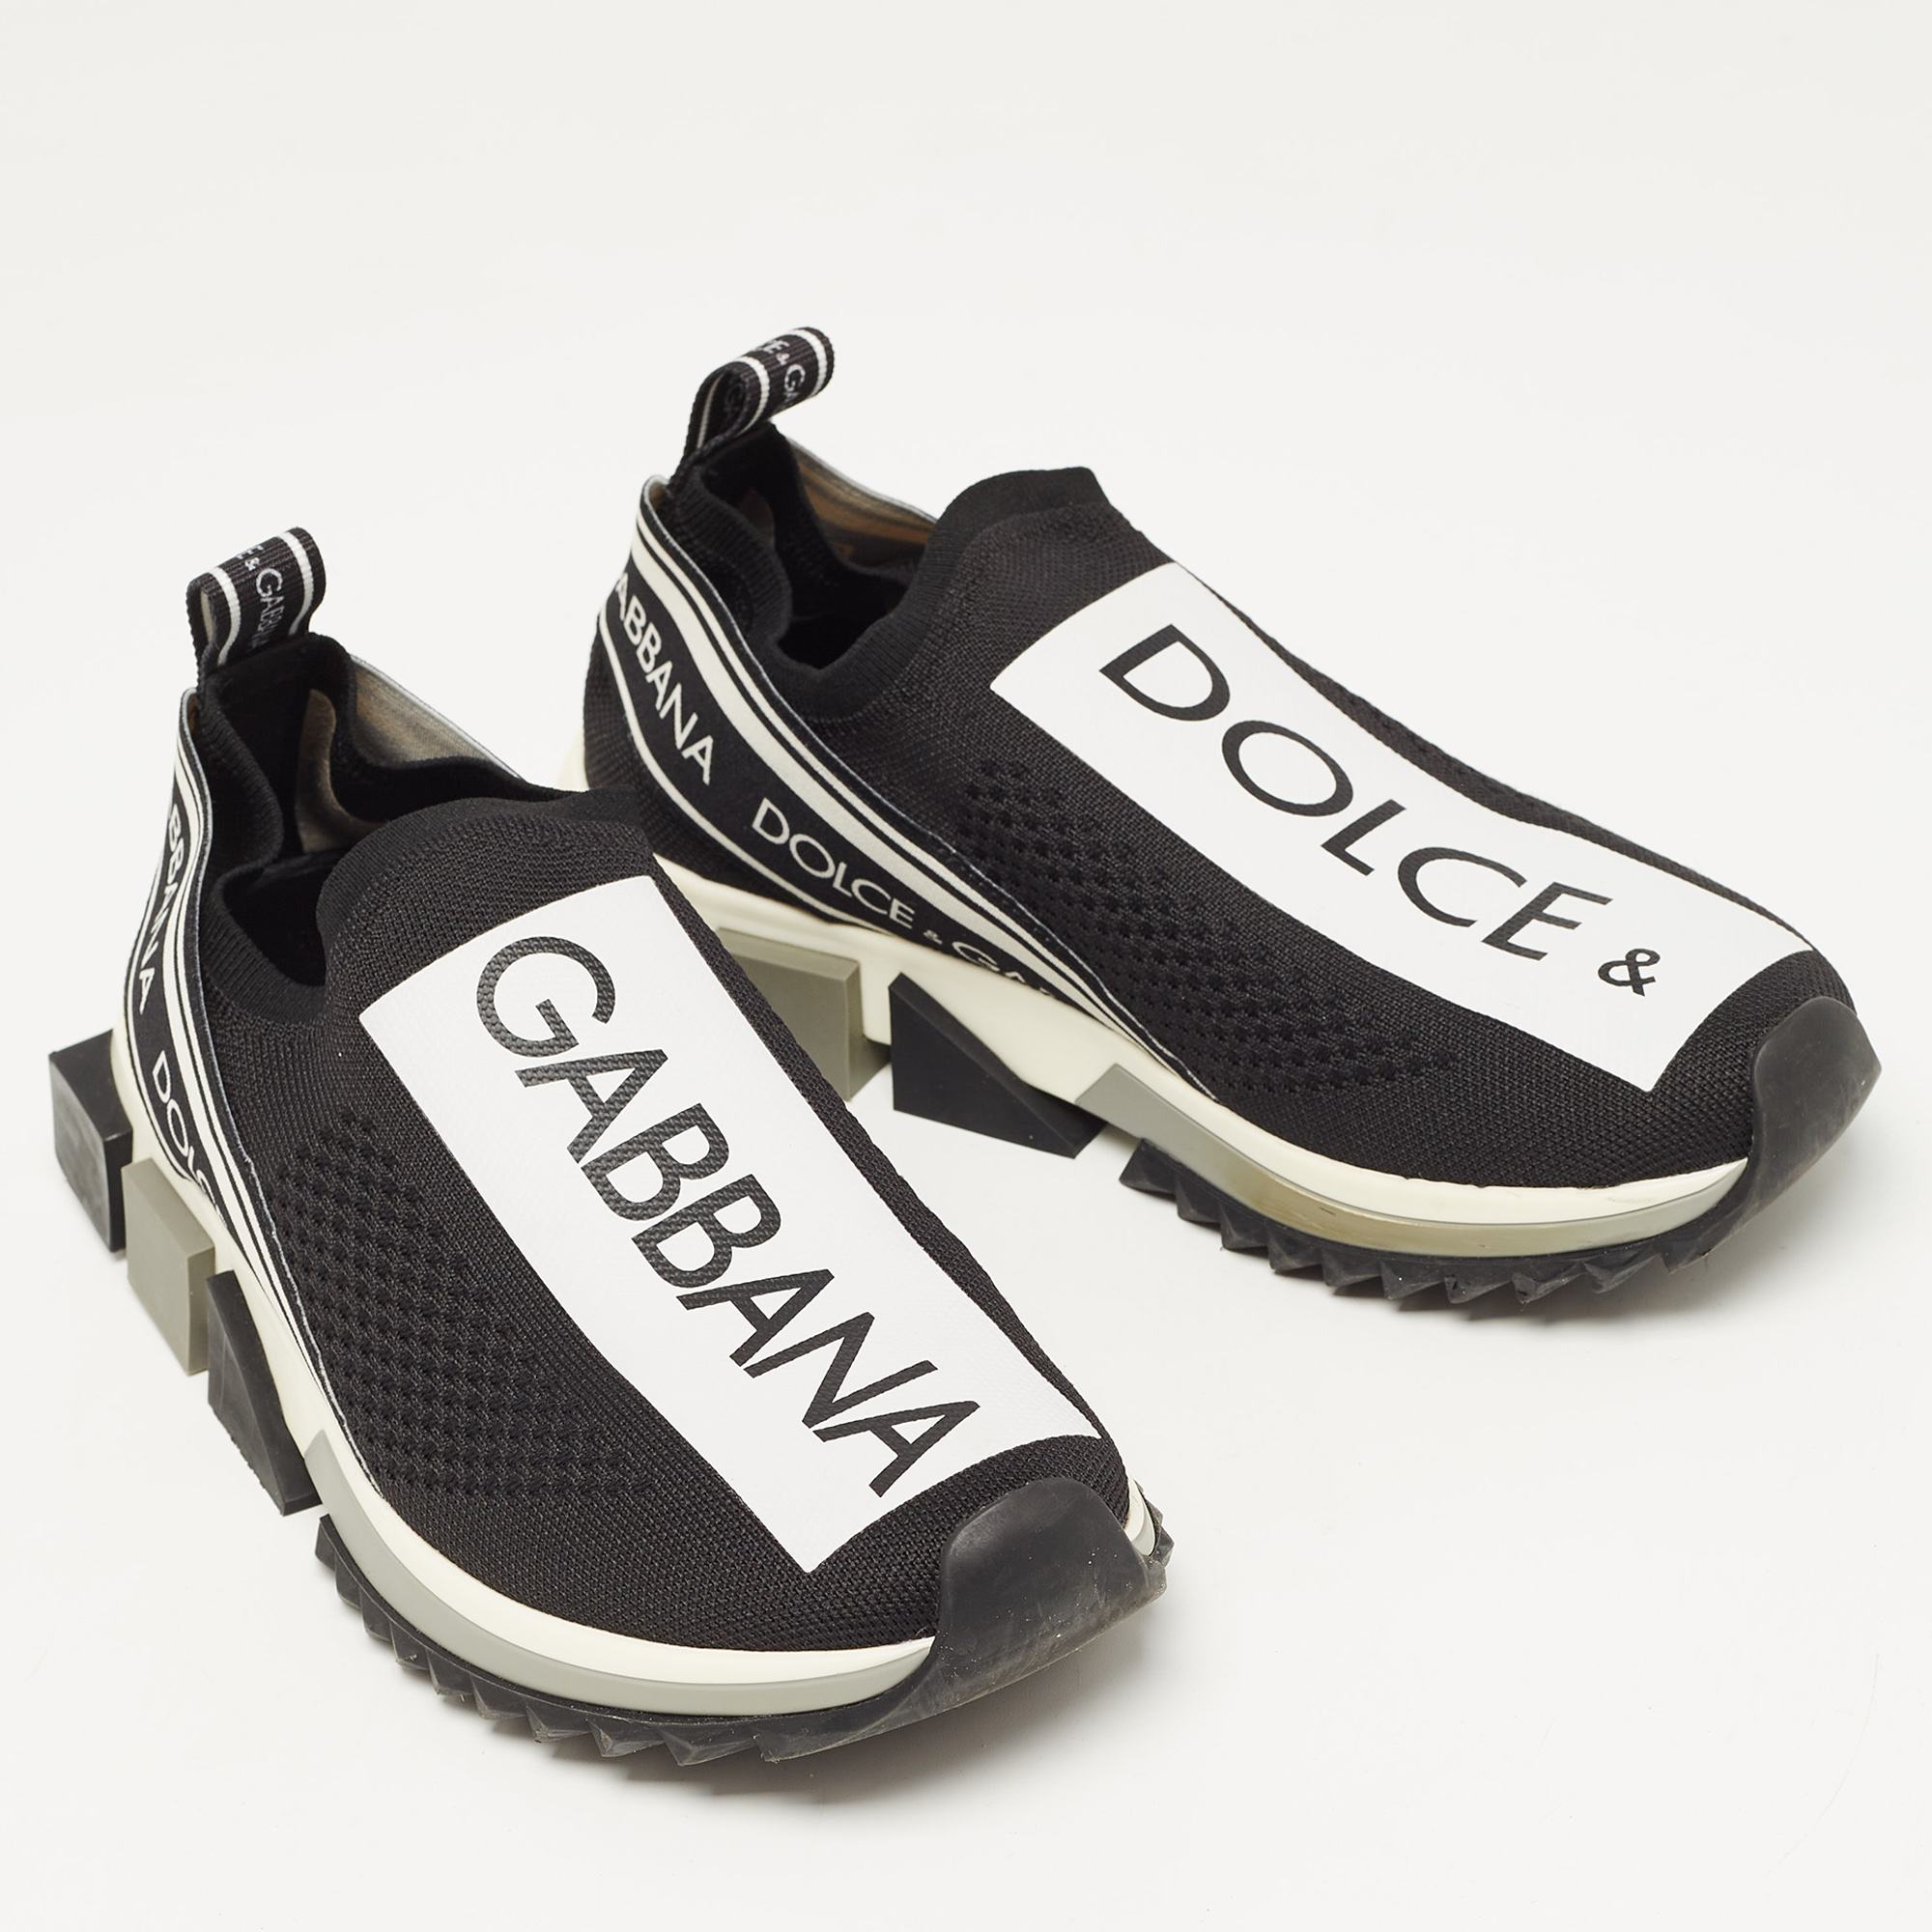 Dolce & Gabbana Black/White Logo Print Knit Fabric Sorrento Sneakers Size 39.5